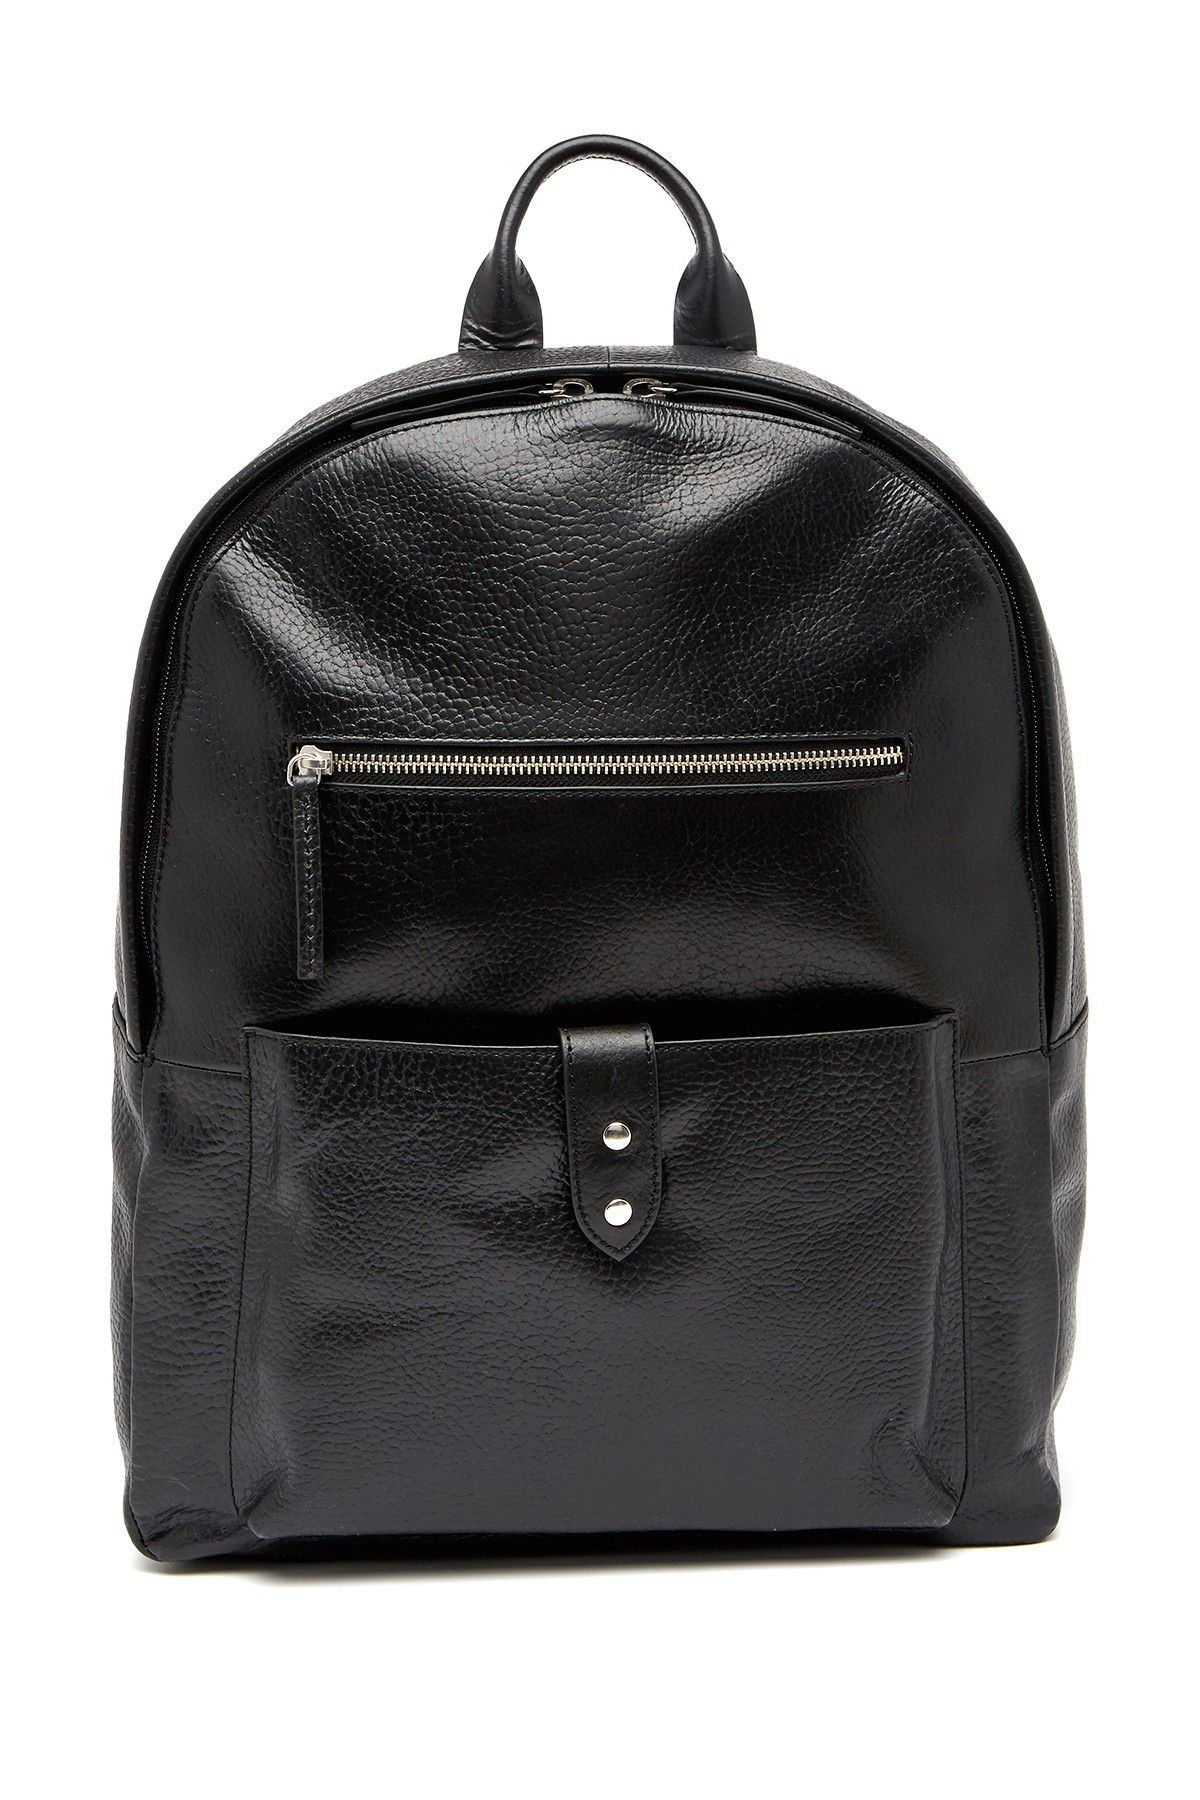 NEW $398 Cole Haan Saunders Leather Zip Top Backpack